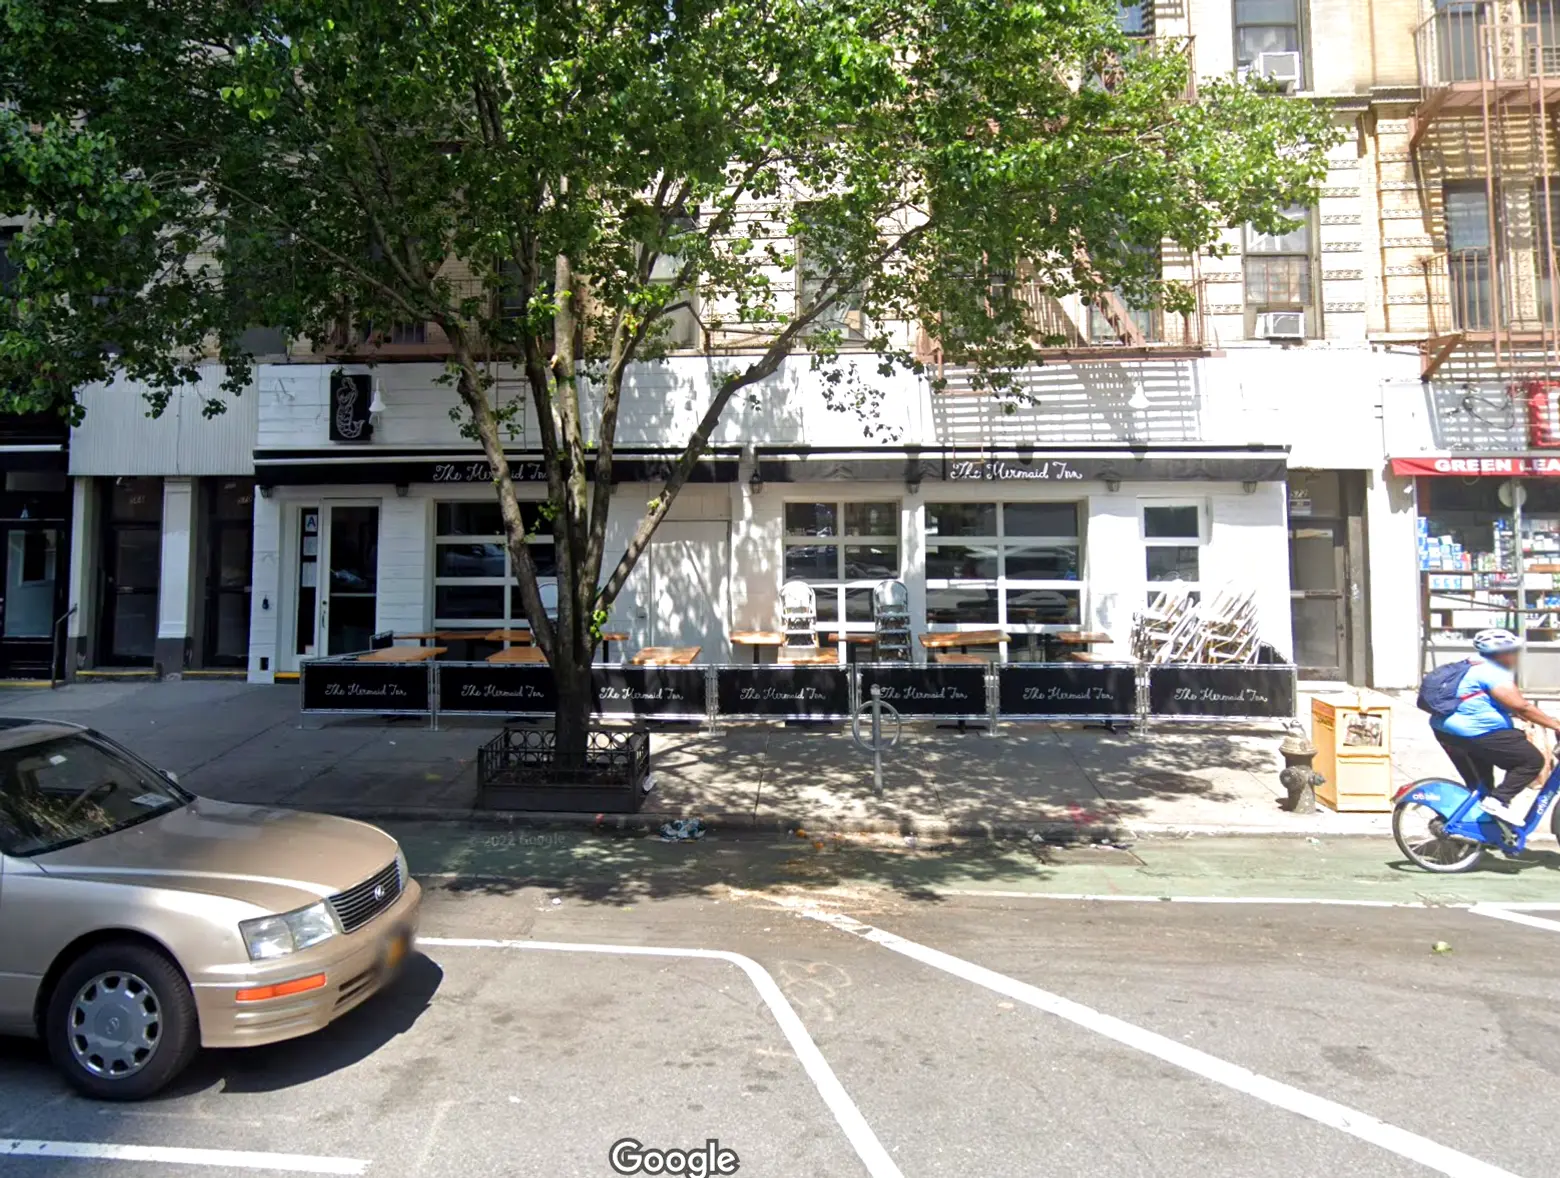 Popular UWS restaurant Mermaid Inn to close after 15 years